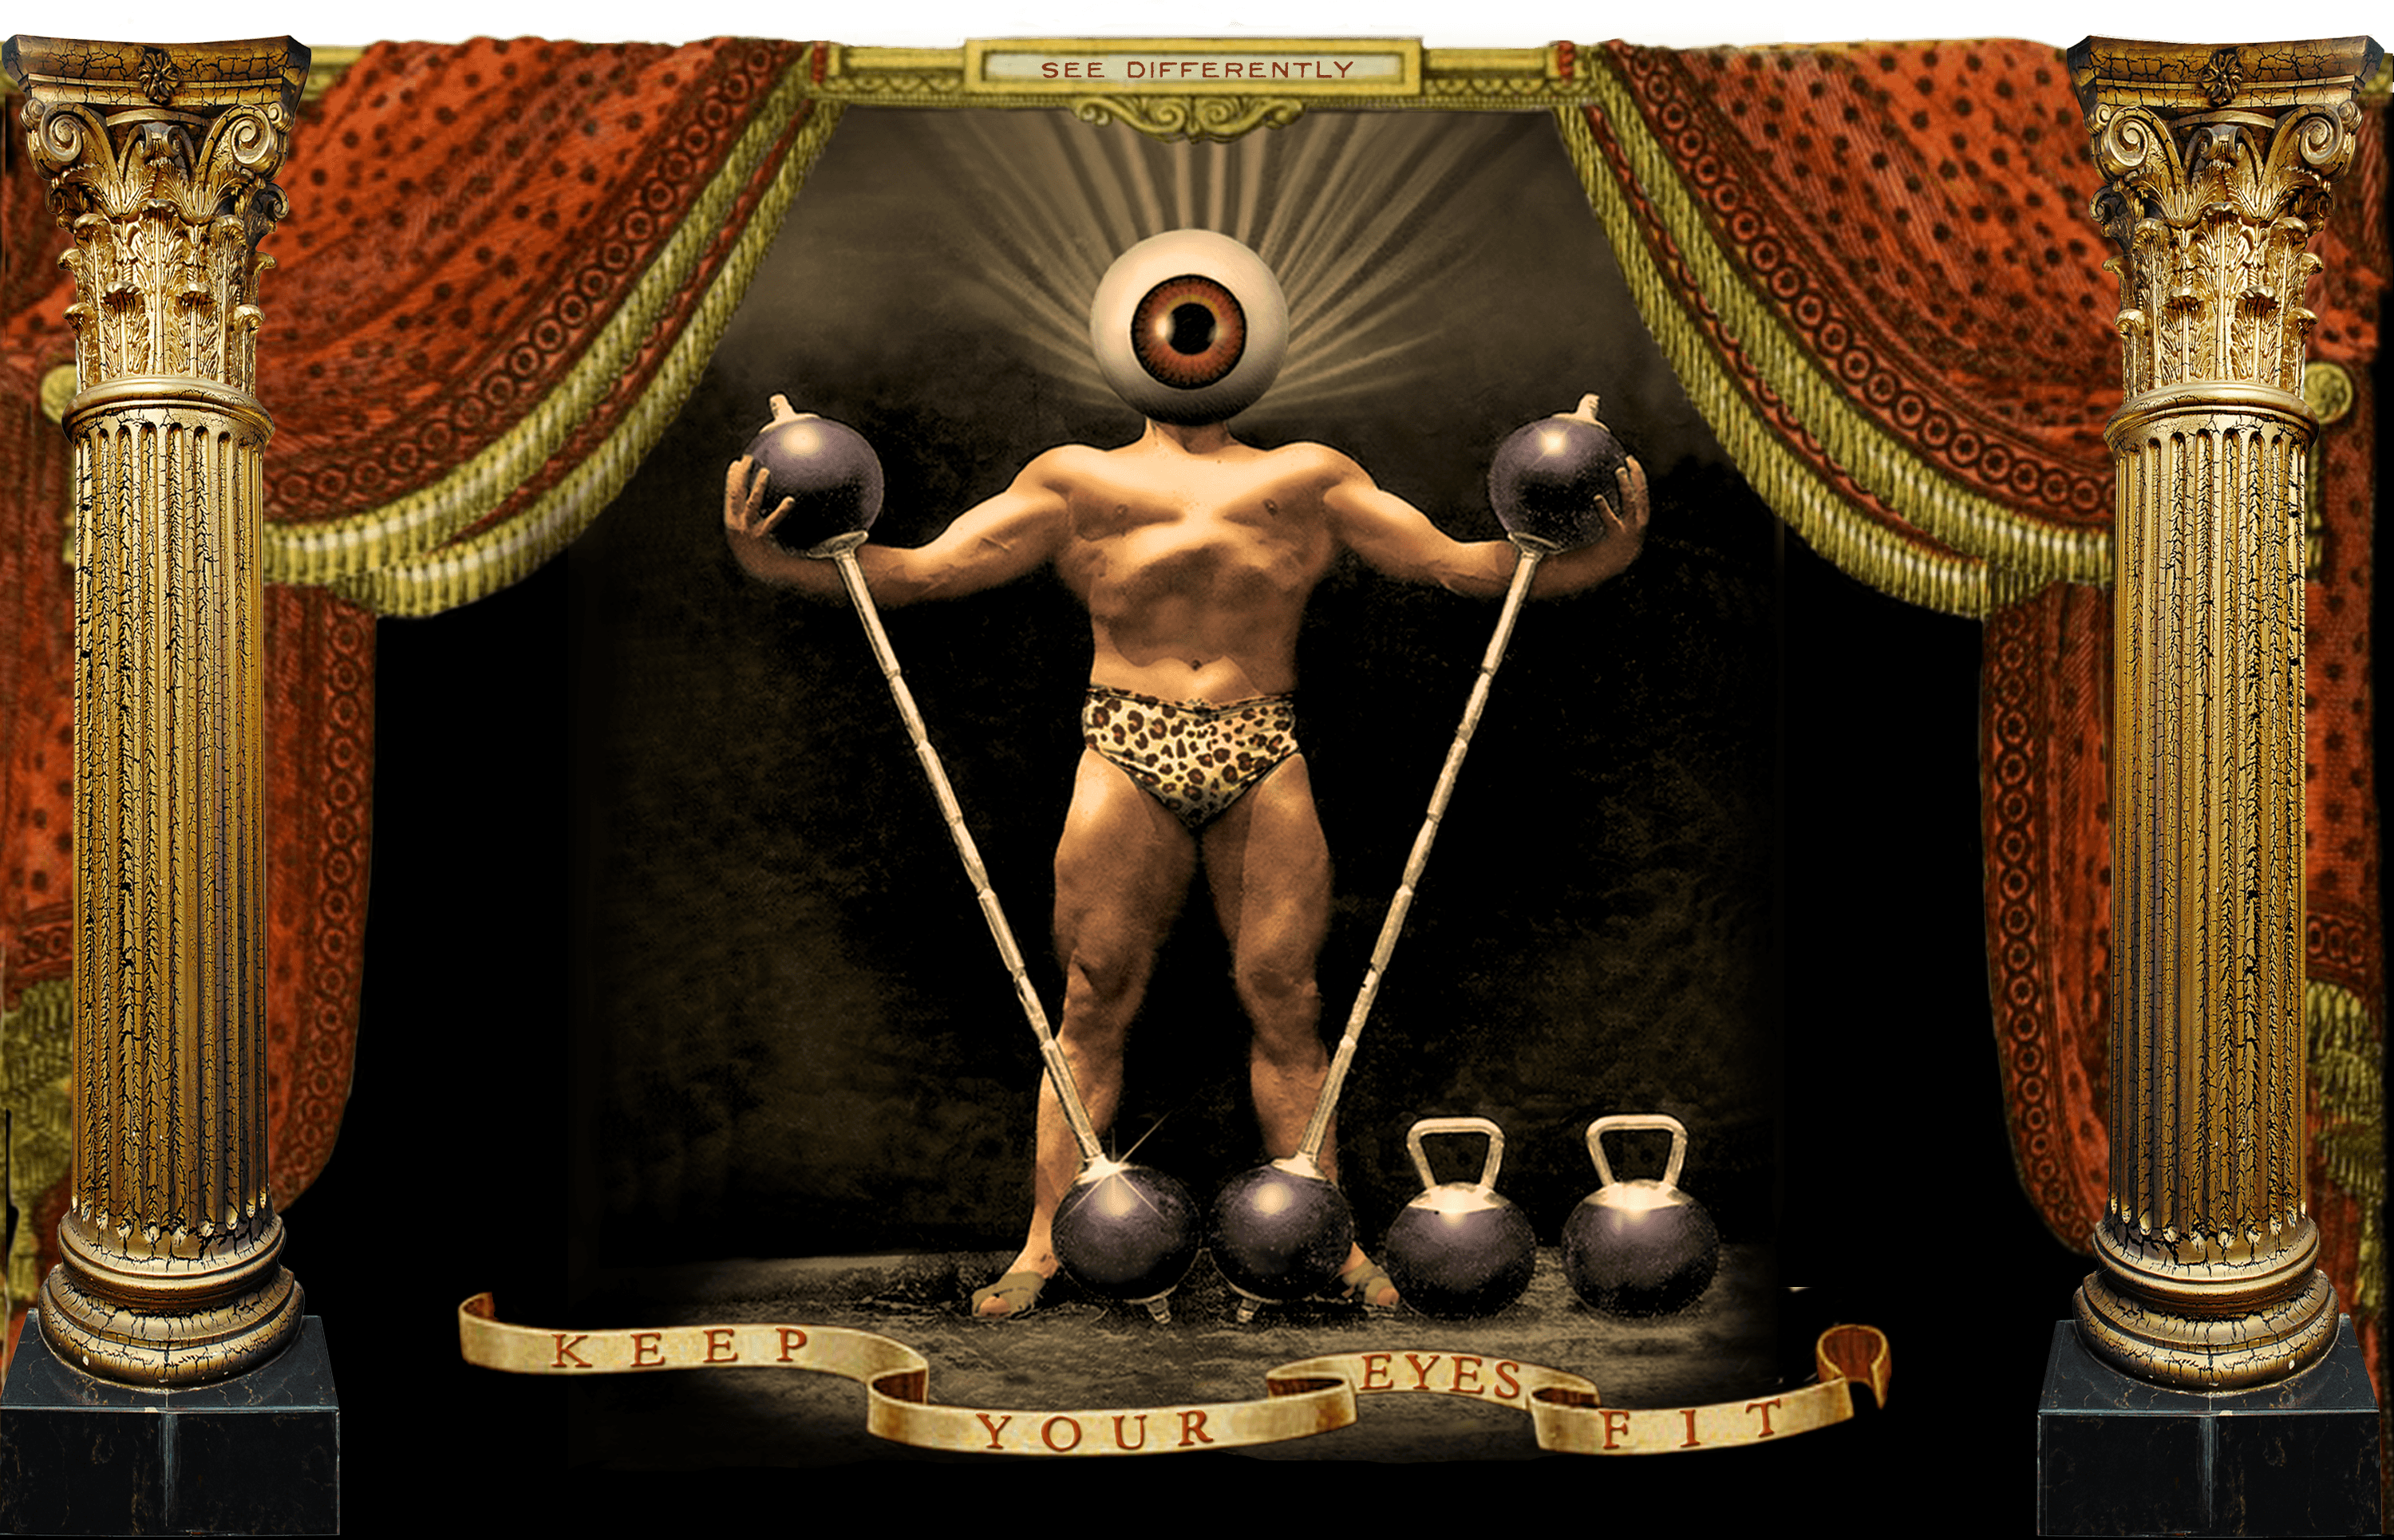 Illustration of Muscular man with eyeball head, between two ornate, golden columns. He is wearing leopard print underwear. 